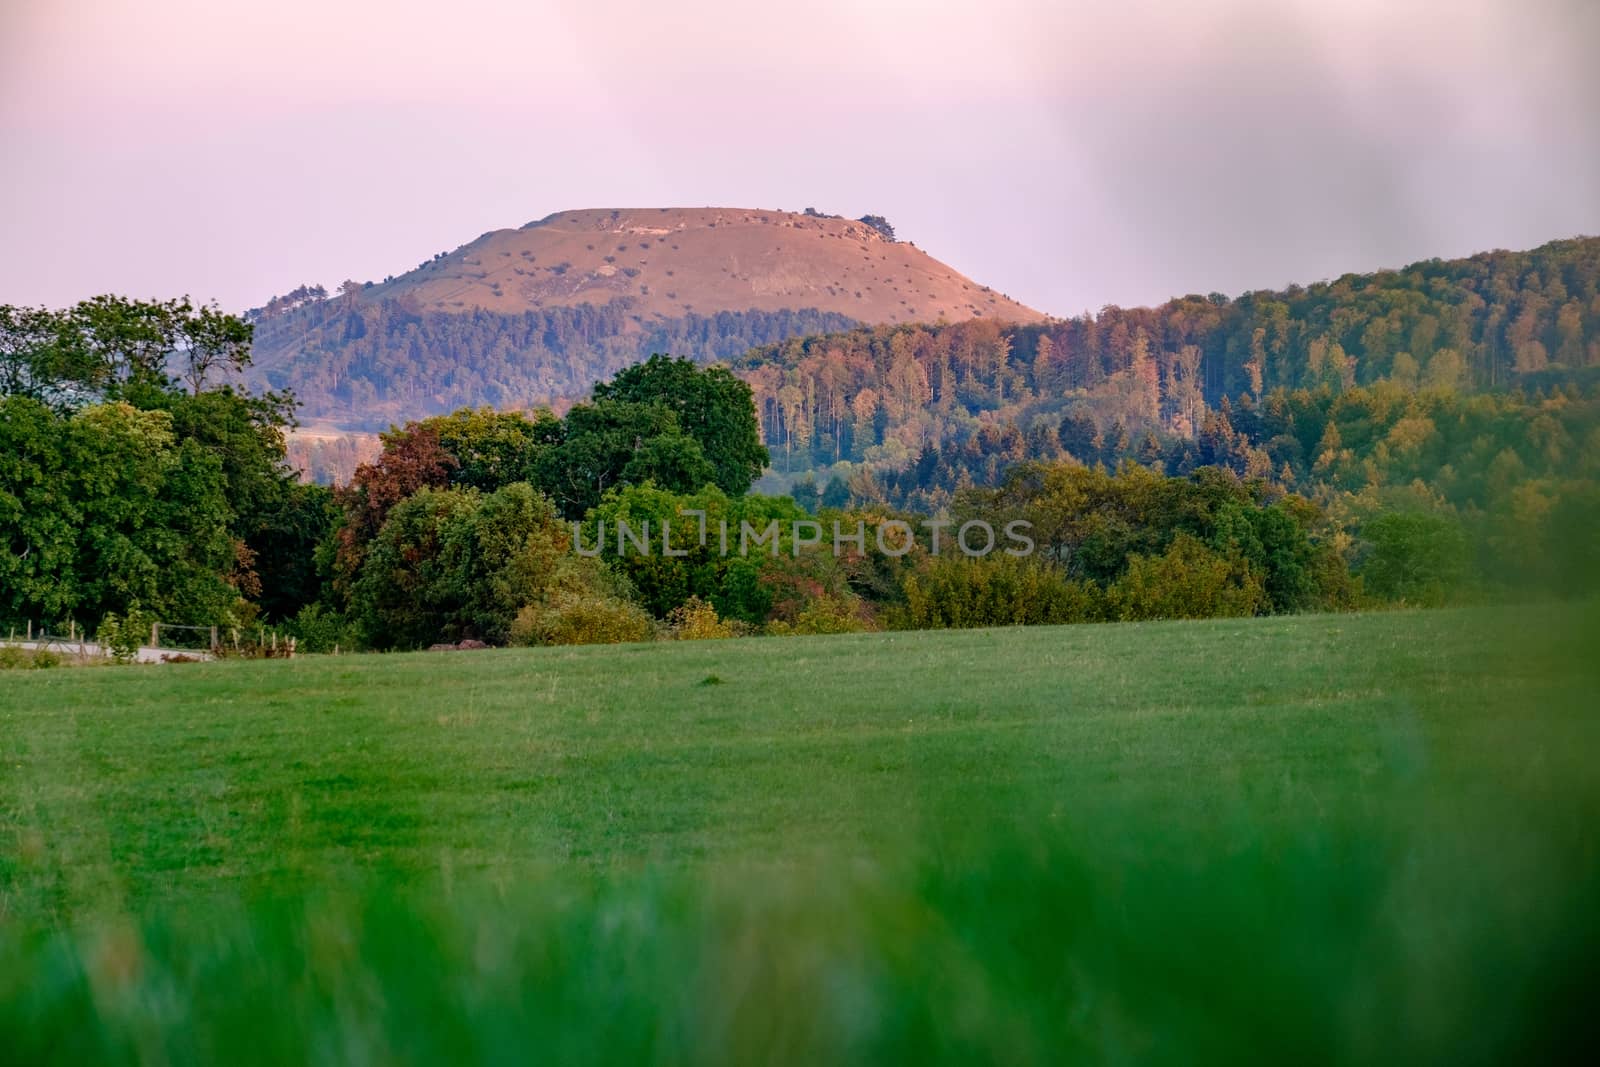 The famous hill Ipf near town Bopfingen in Germany in the evening in summer